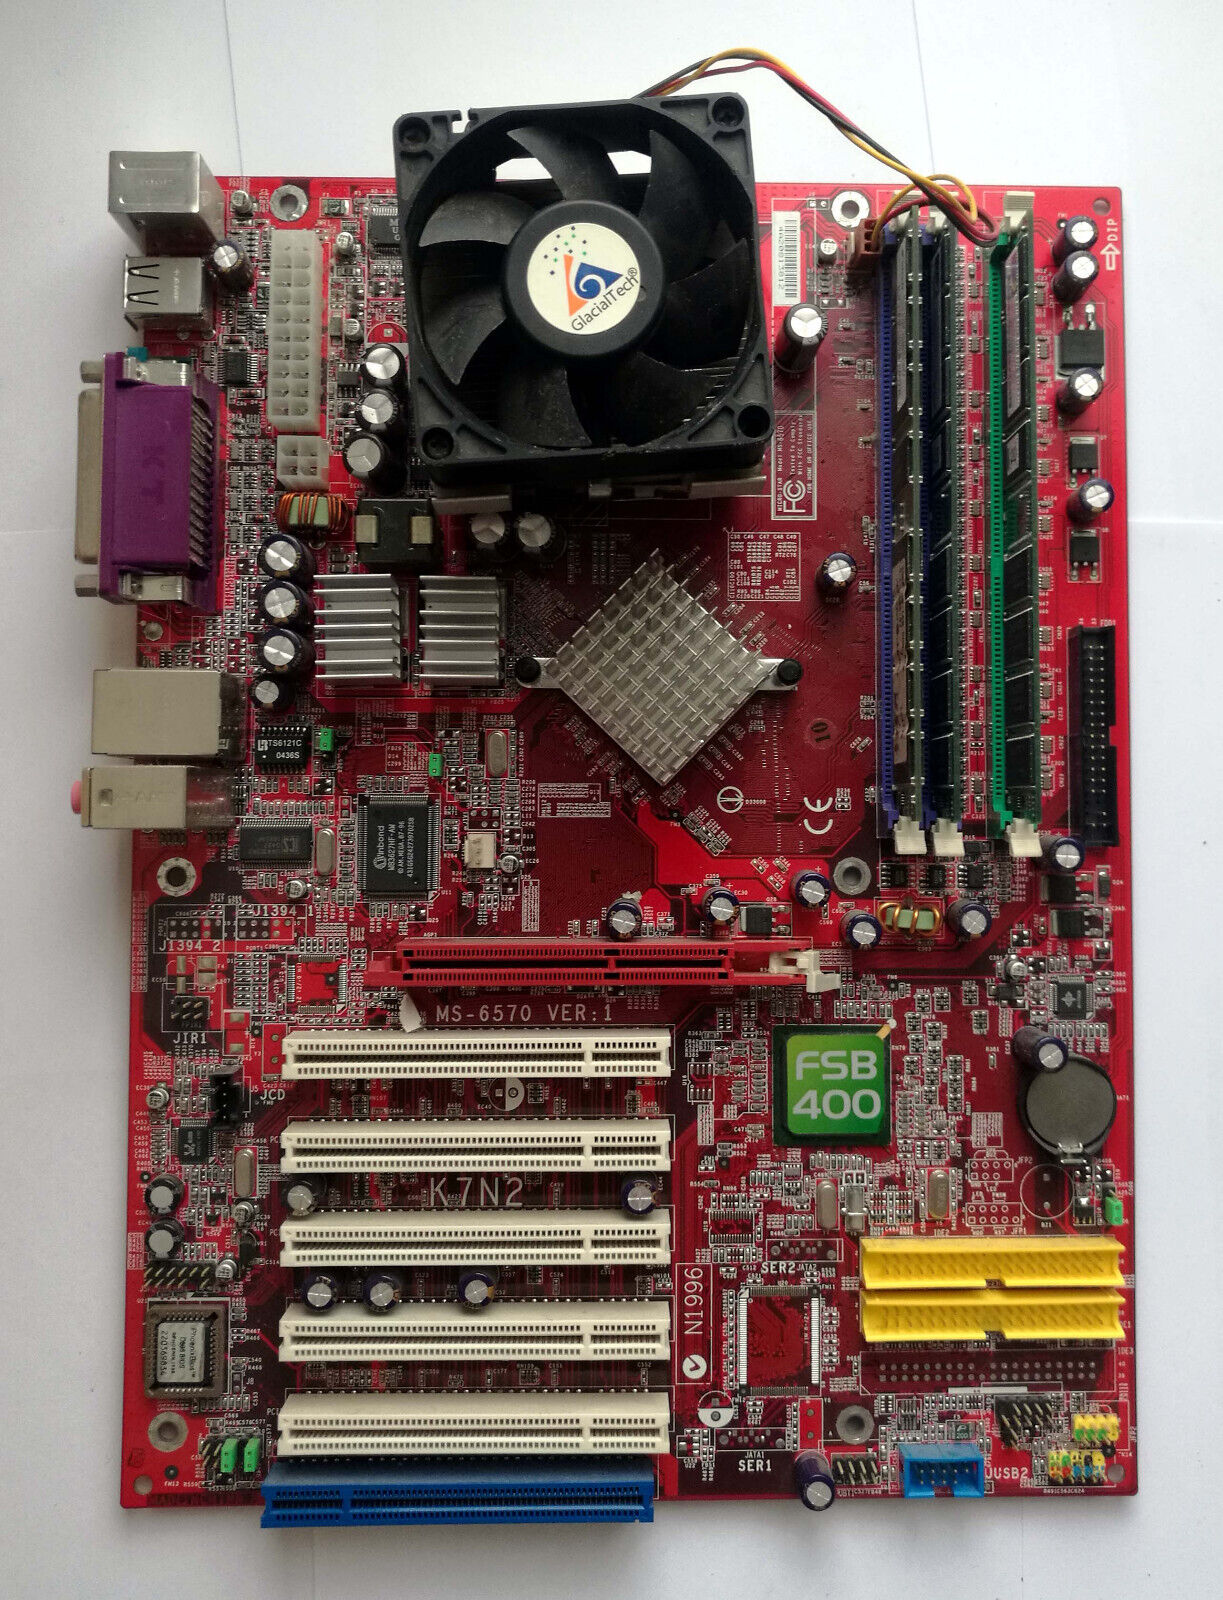 MSI K7N2 Motherboard with AMD Athlon XP 2600+ CPU and 2GB RAM - Test OK